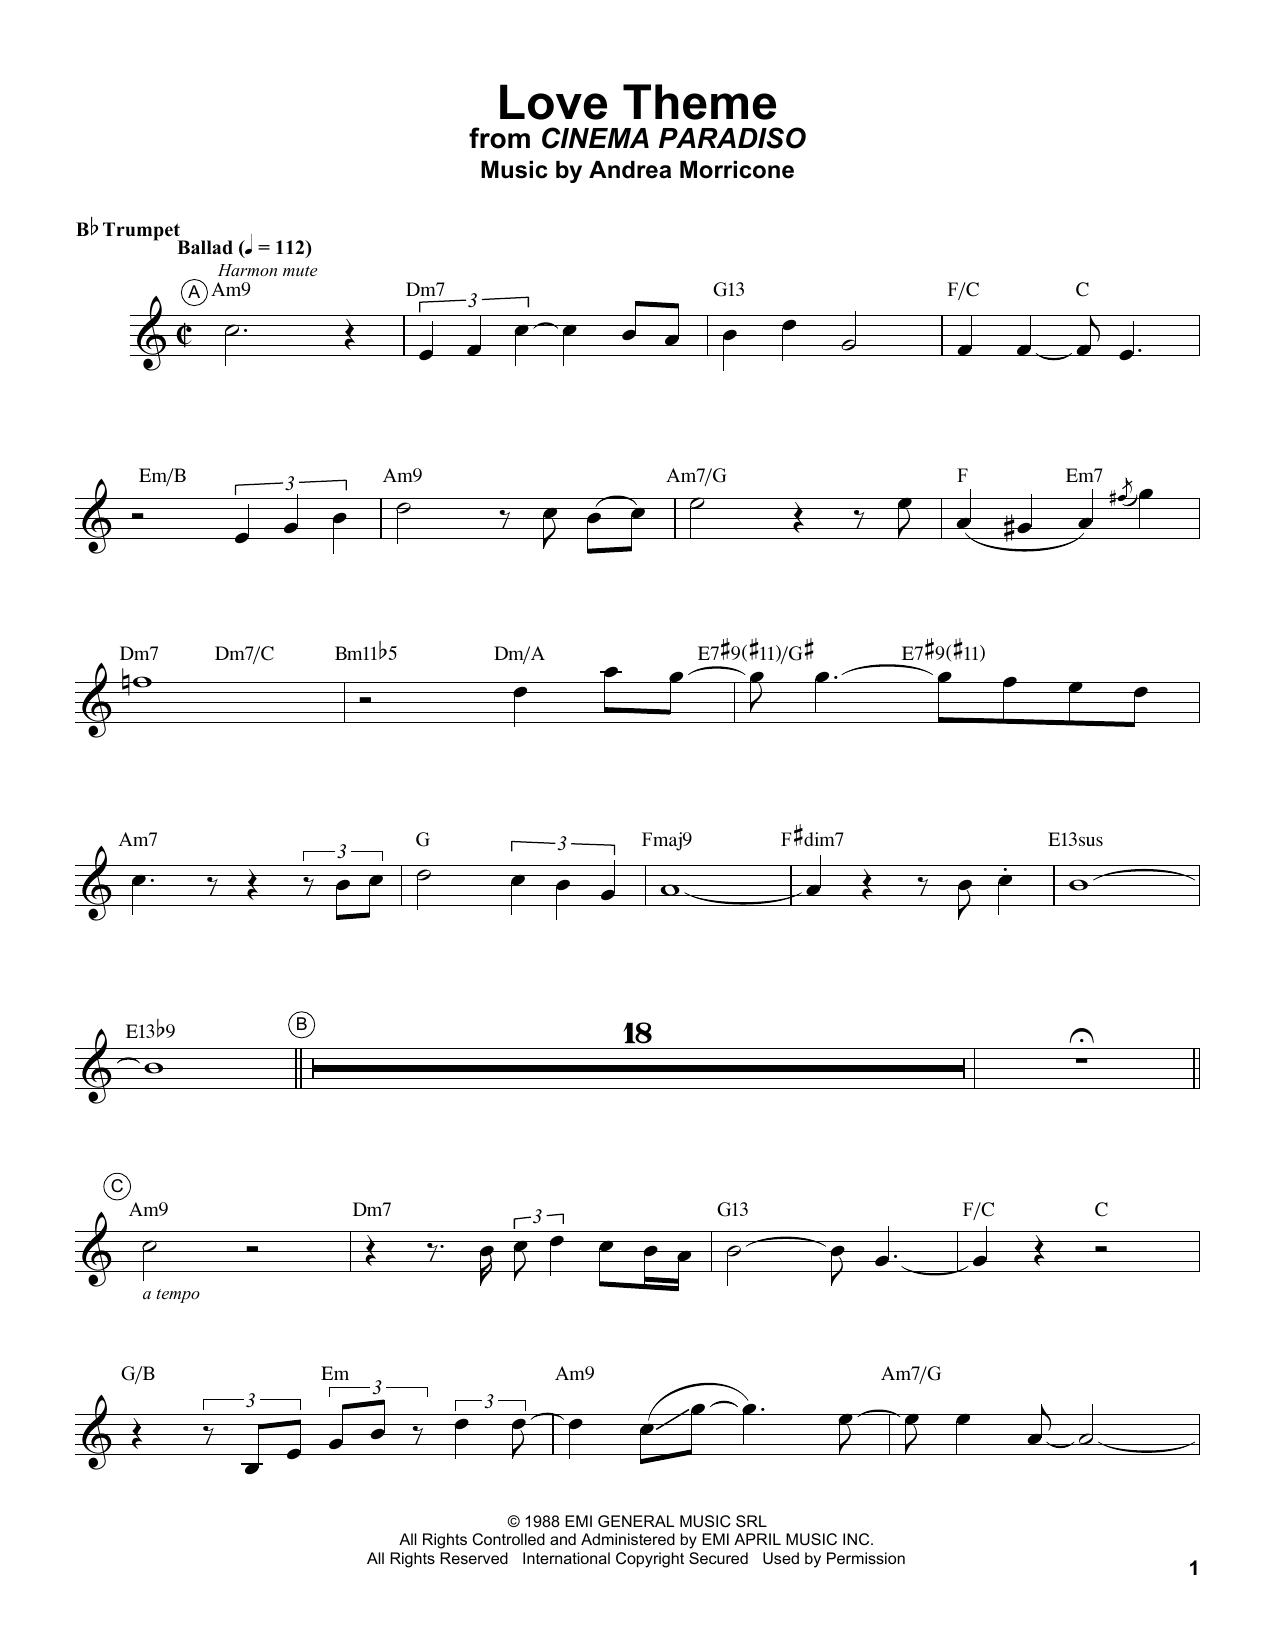 Chris Botti Love Theme (Tema D'Amore) Sheet Music Notes & Chords for Trumpet Transcription - Download or Print PDF